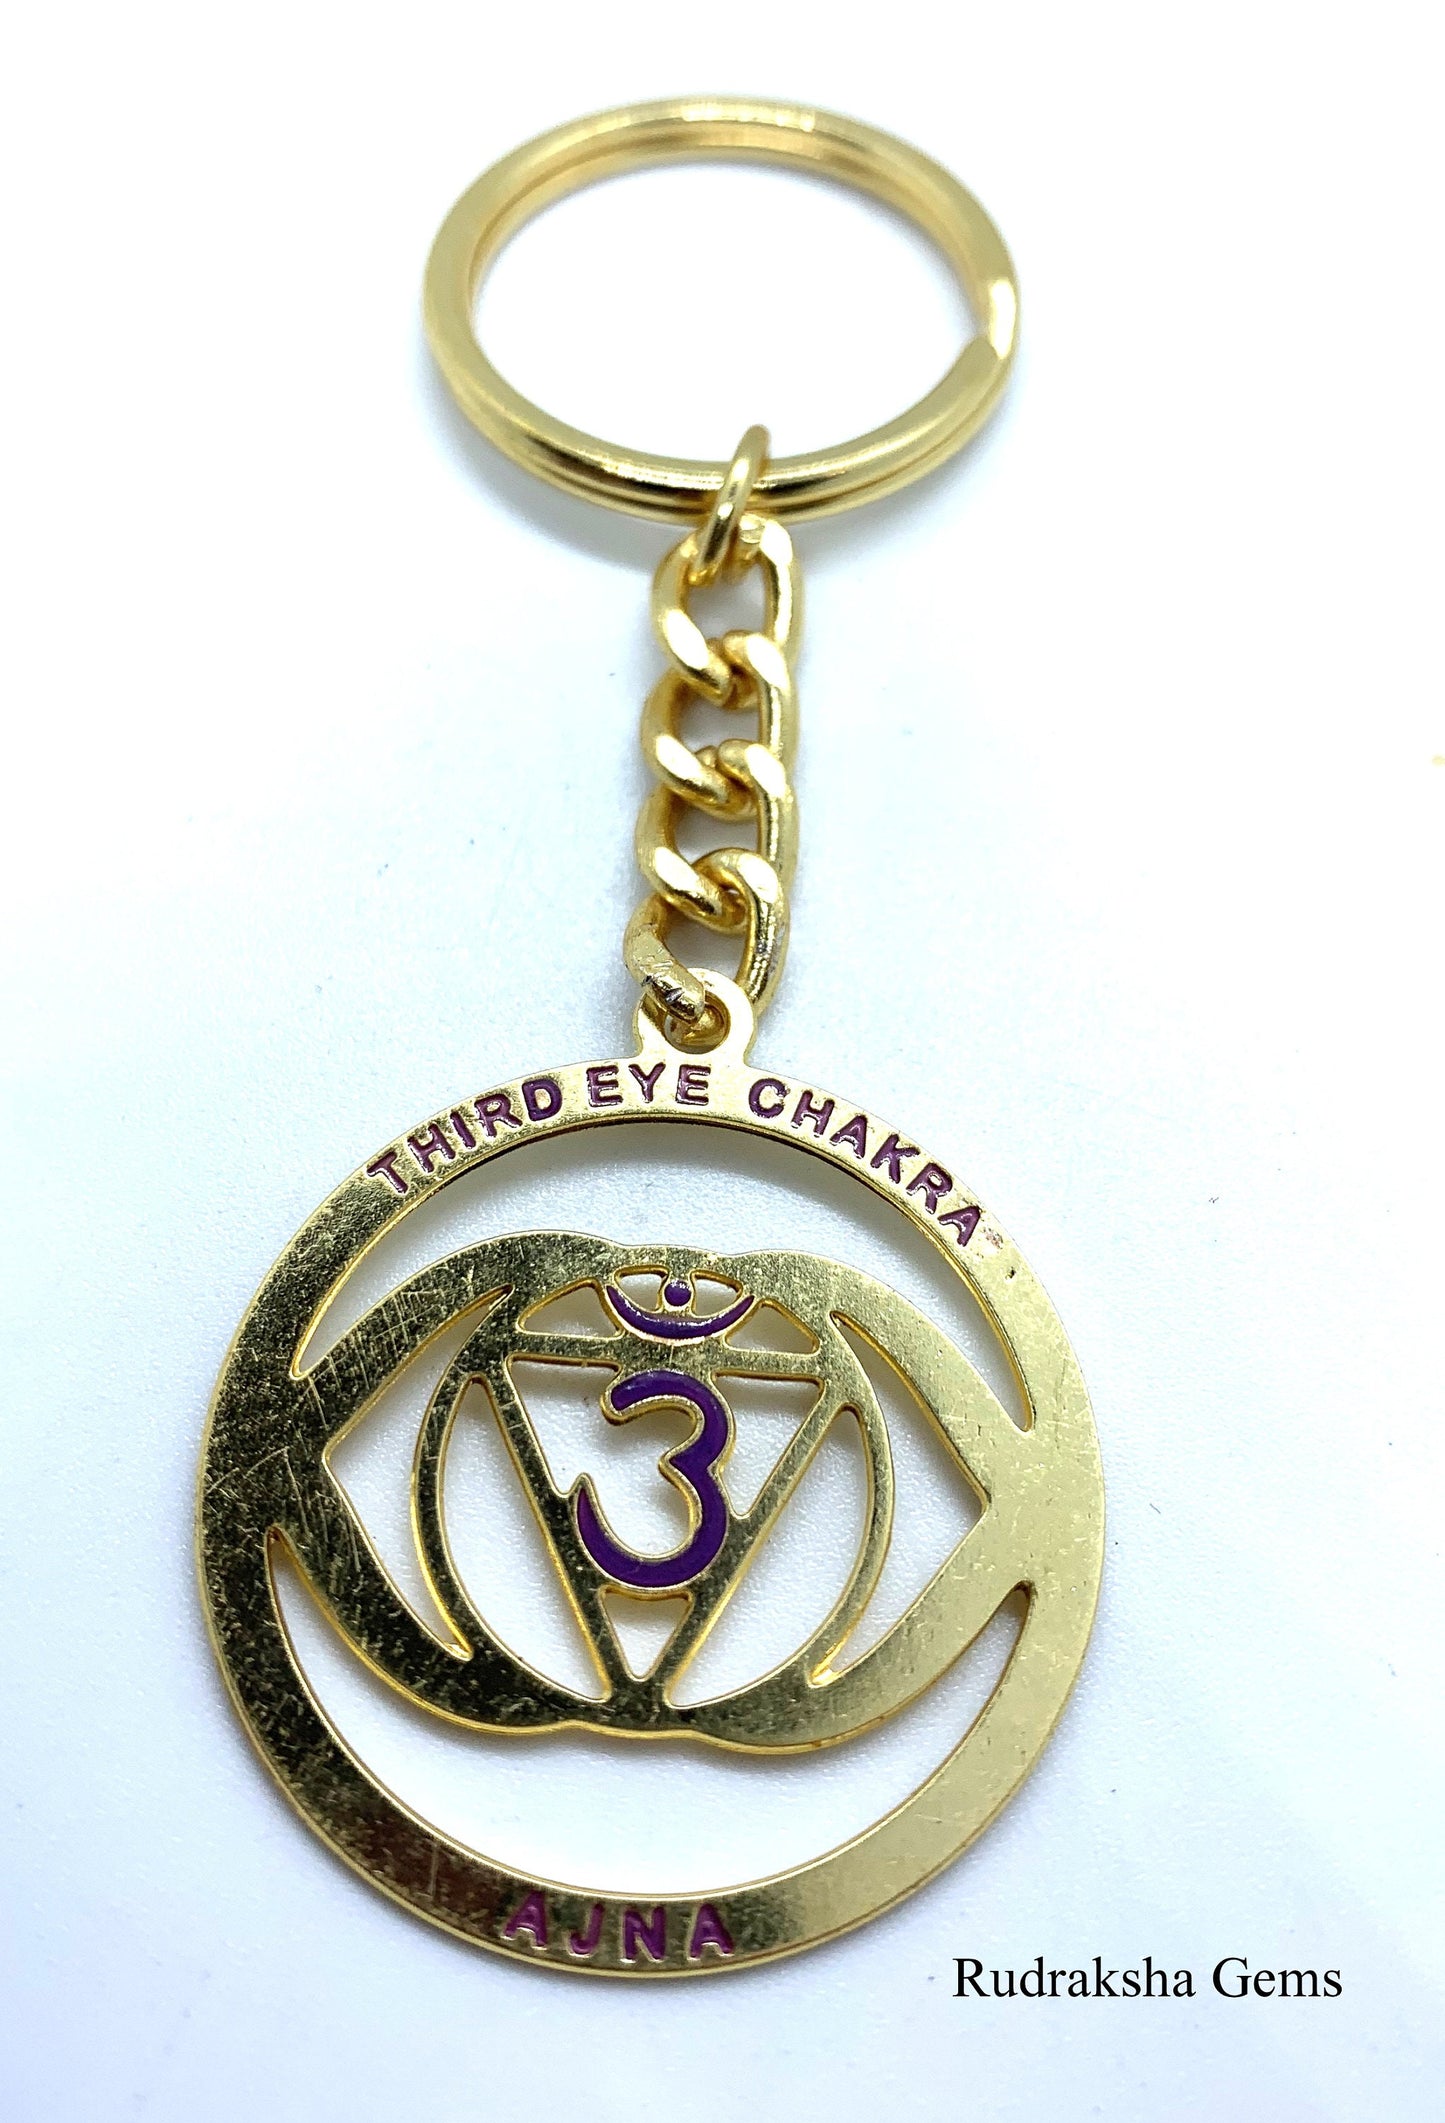 7 CHAKRA Key ring Yoga Healing Symbols Golden metal Keyring Bag Charm  - Crown, Third Eye, Throat, Heart, Solar Plexus, Sacral, Root Chakra